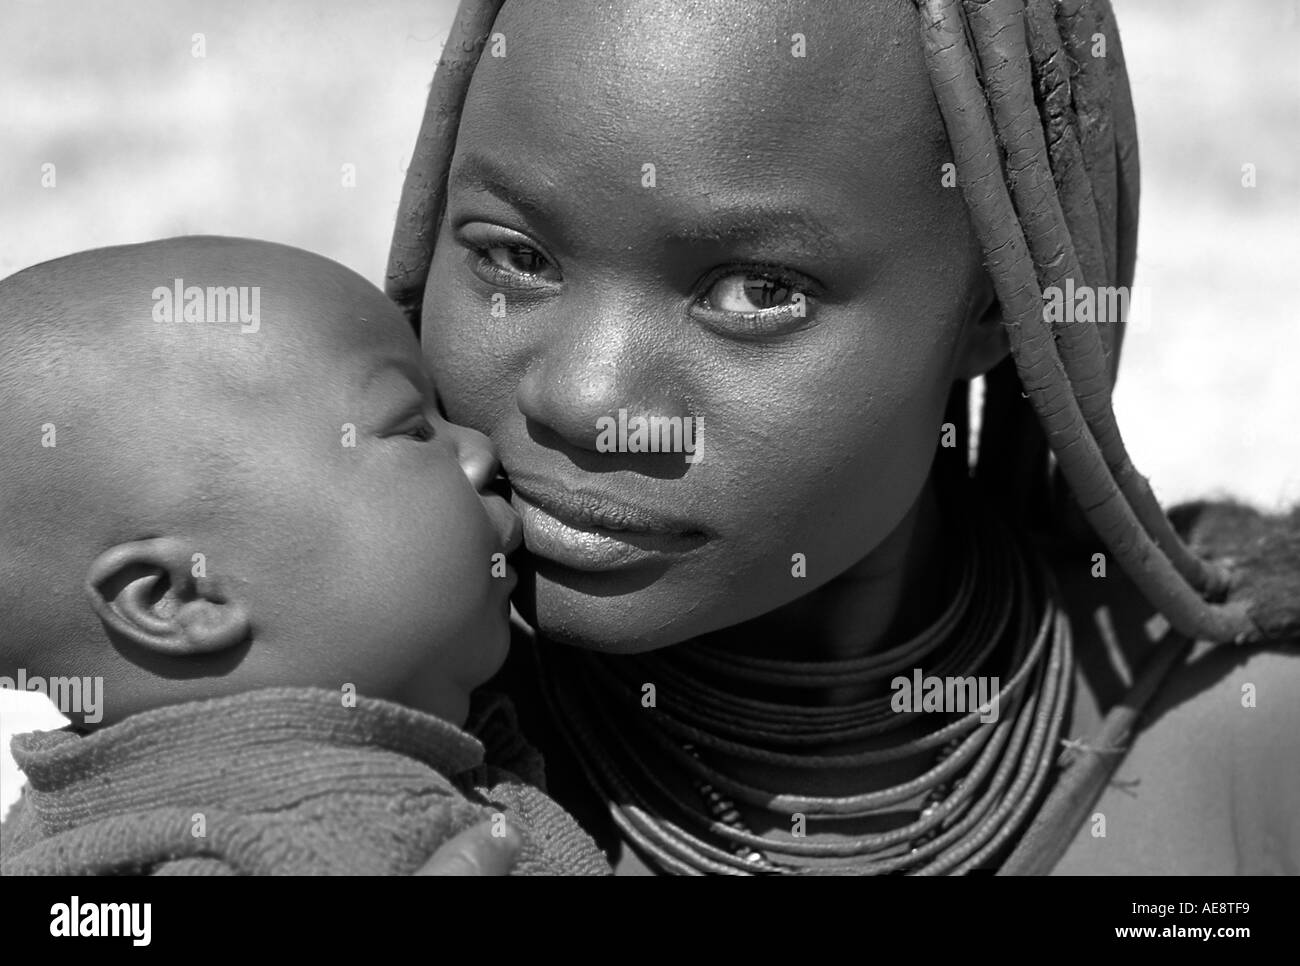 Himba Mutter Baby Kaokoveld südlich von Opuwo Namibia Monochrome Fotografie Stockfoto